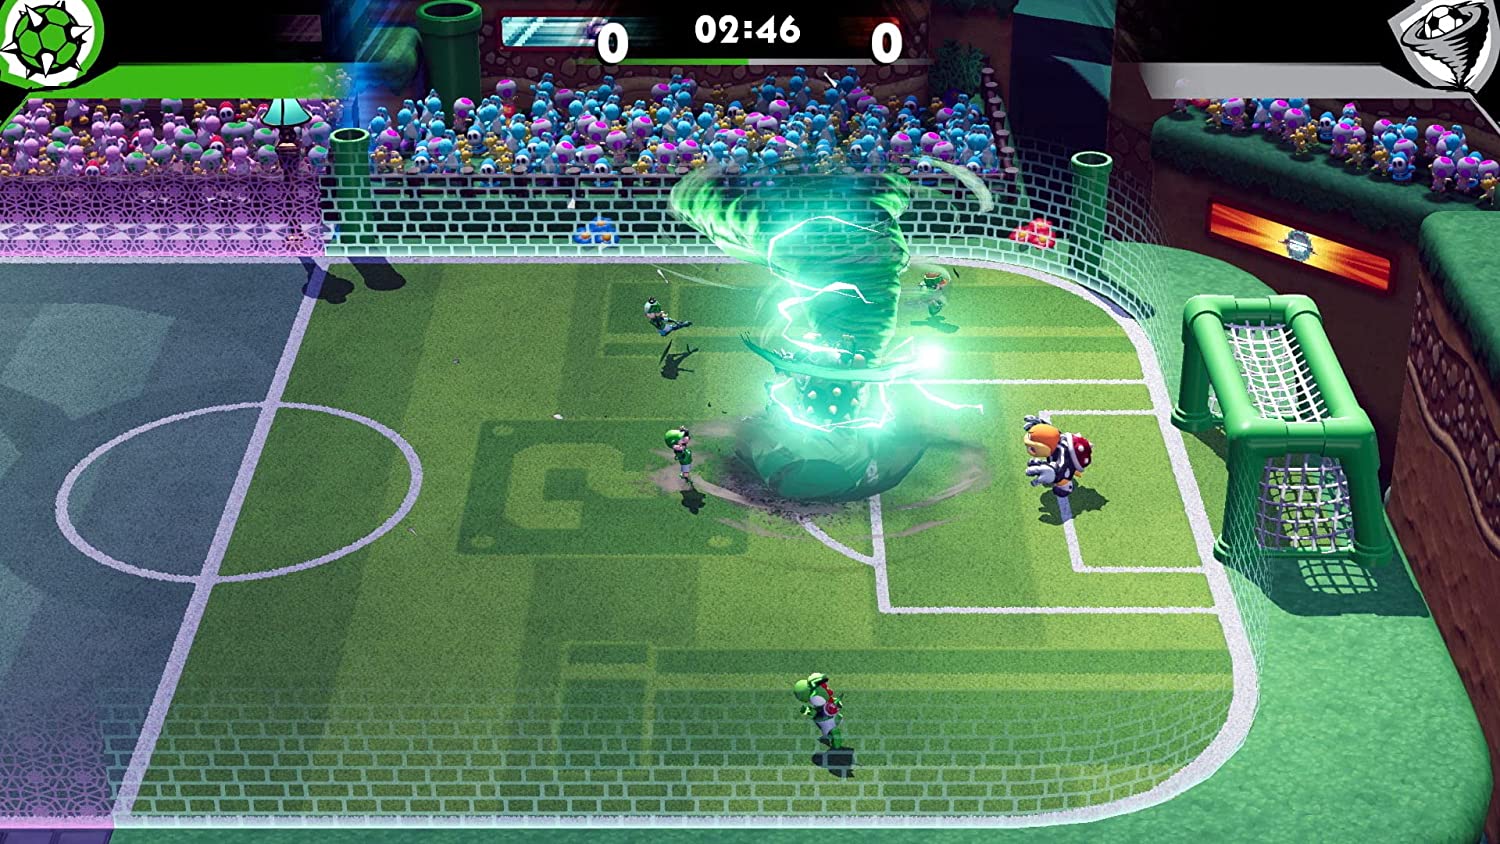 Mario Strikers: Battle League Football Switch